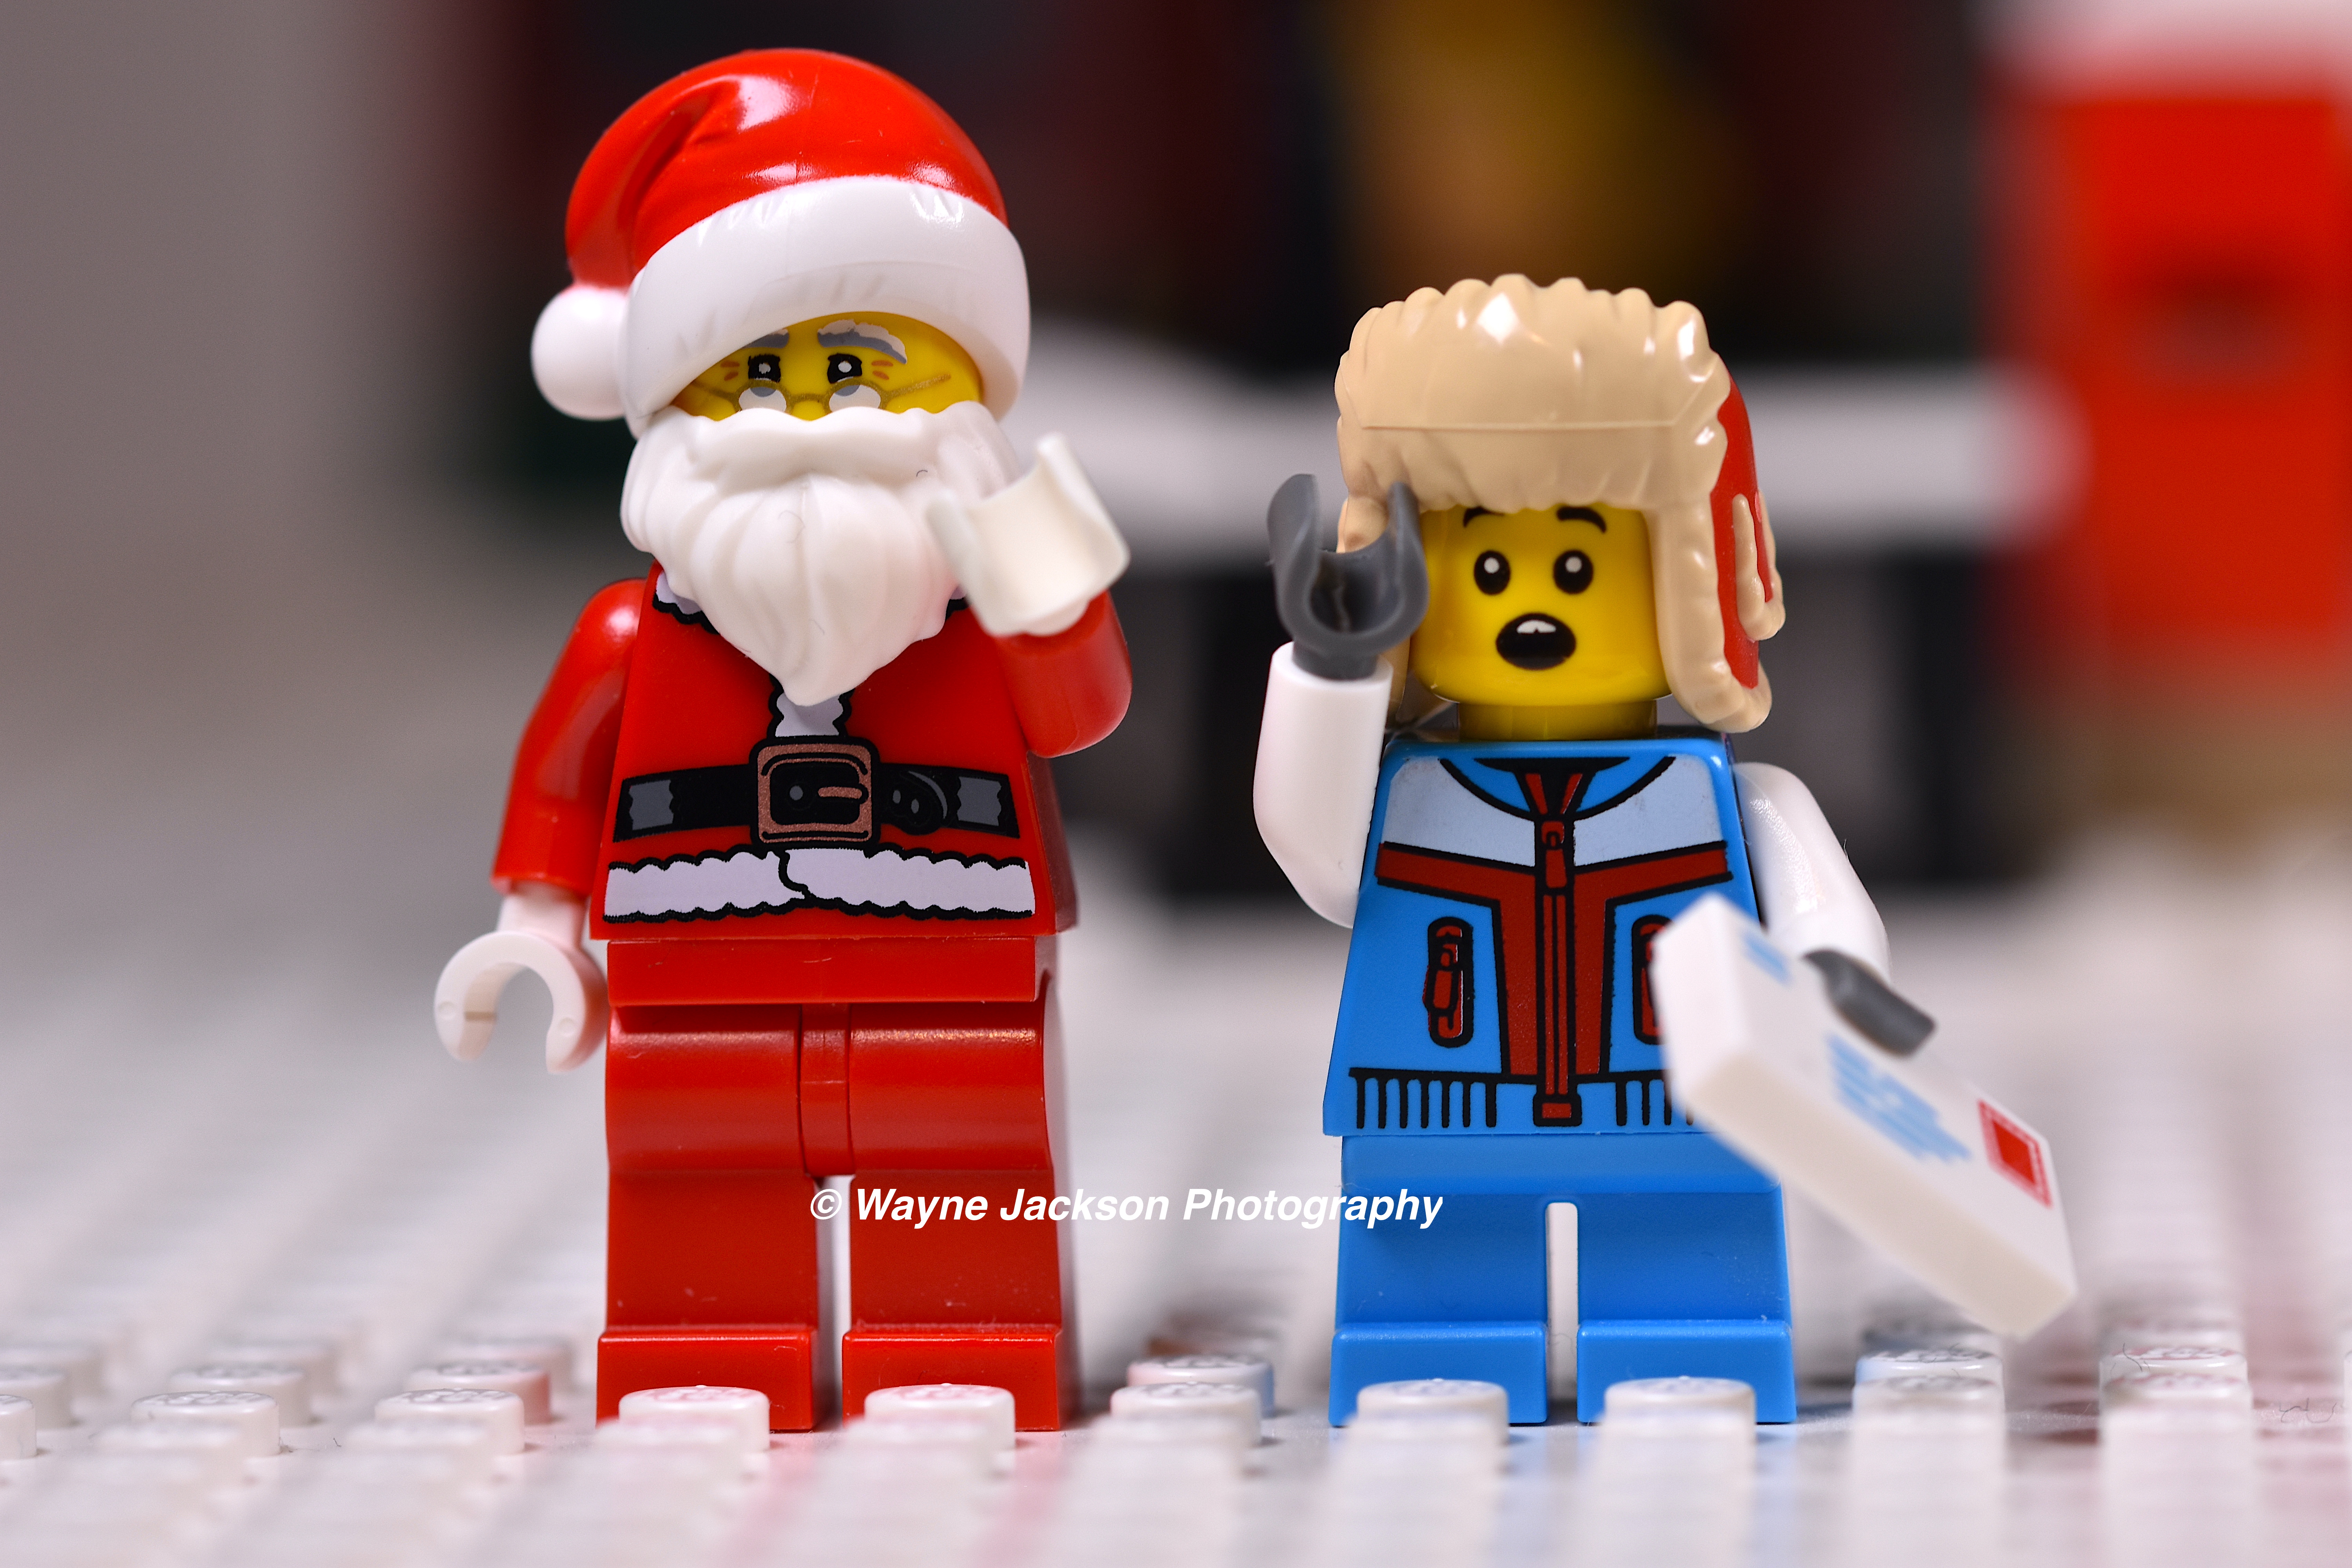 2 x Lego minifigures including Santa